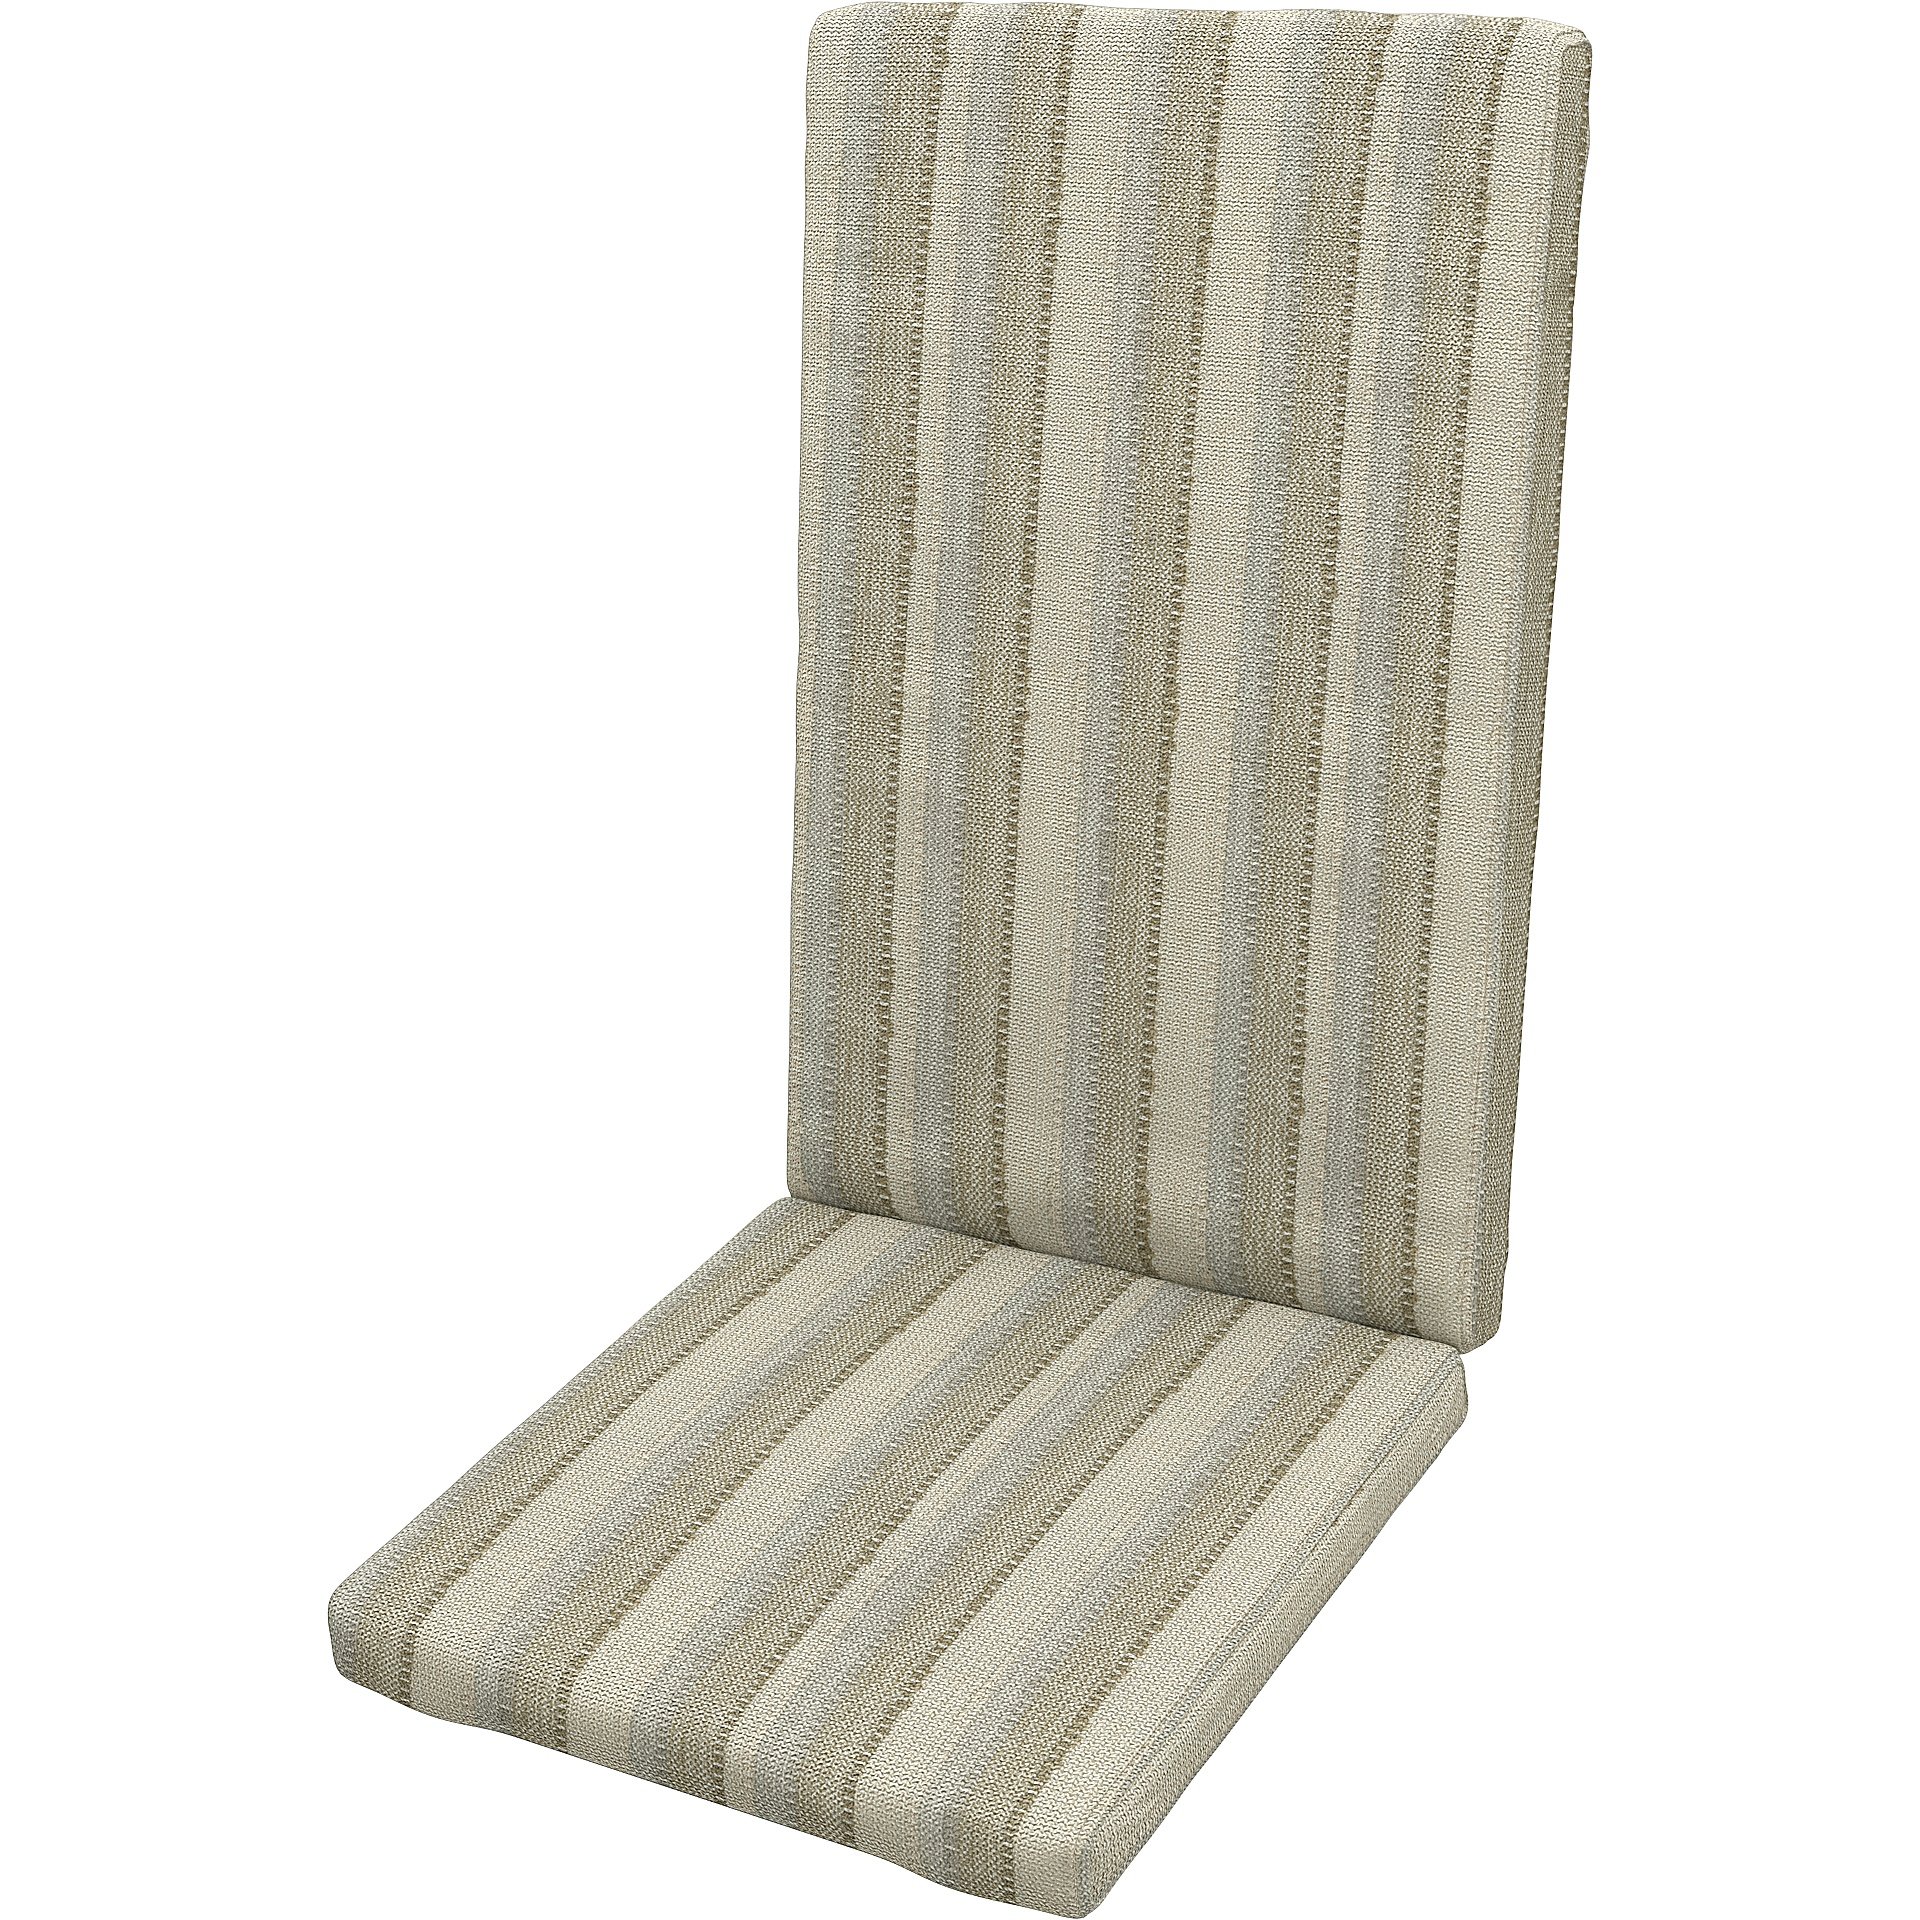 IKEA - Froson/Duvholmen Position Chair Cushion Cover, Beach Beige, Outdoor - Bemz